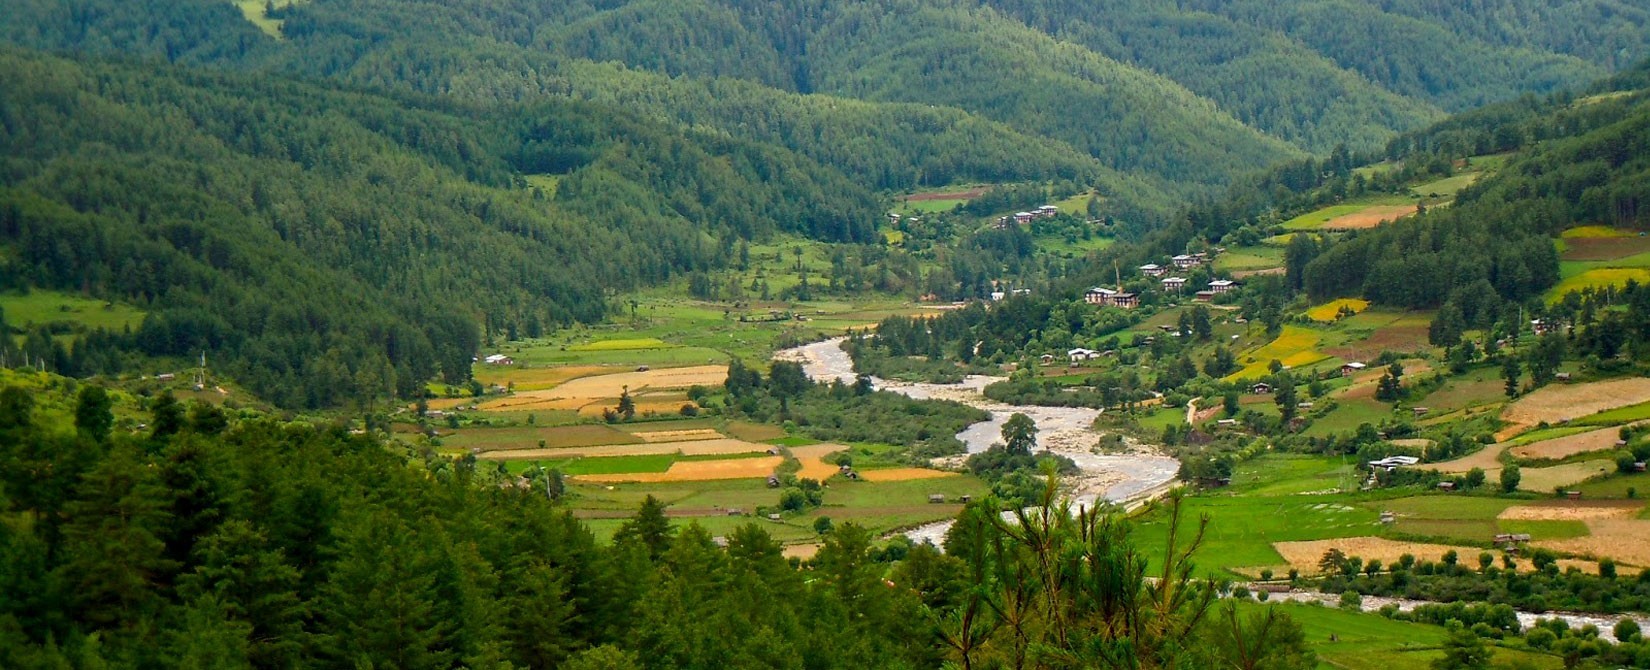 bhumthang-valley-banner